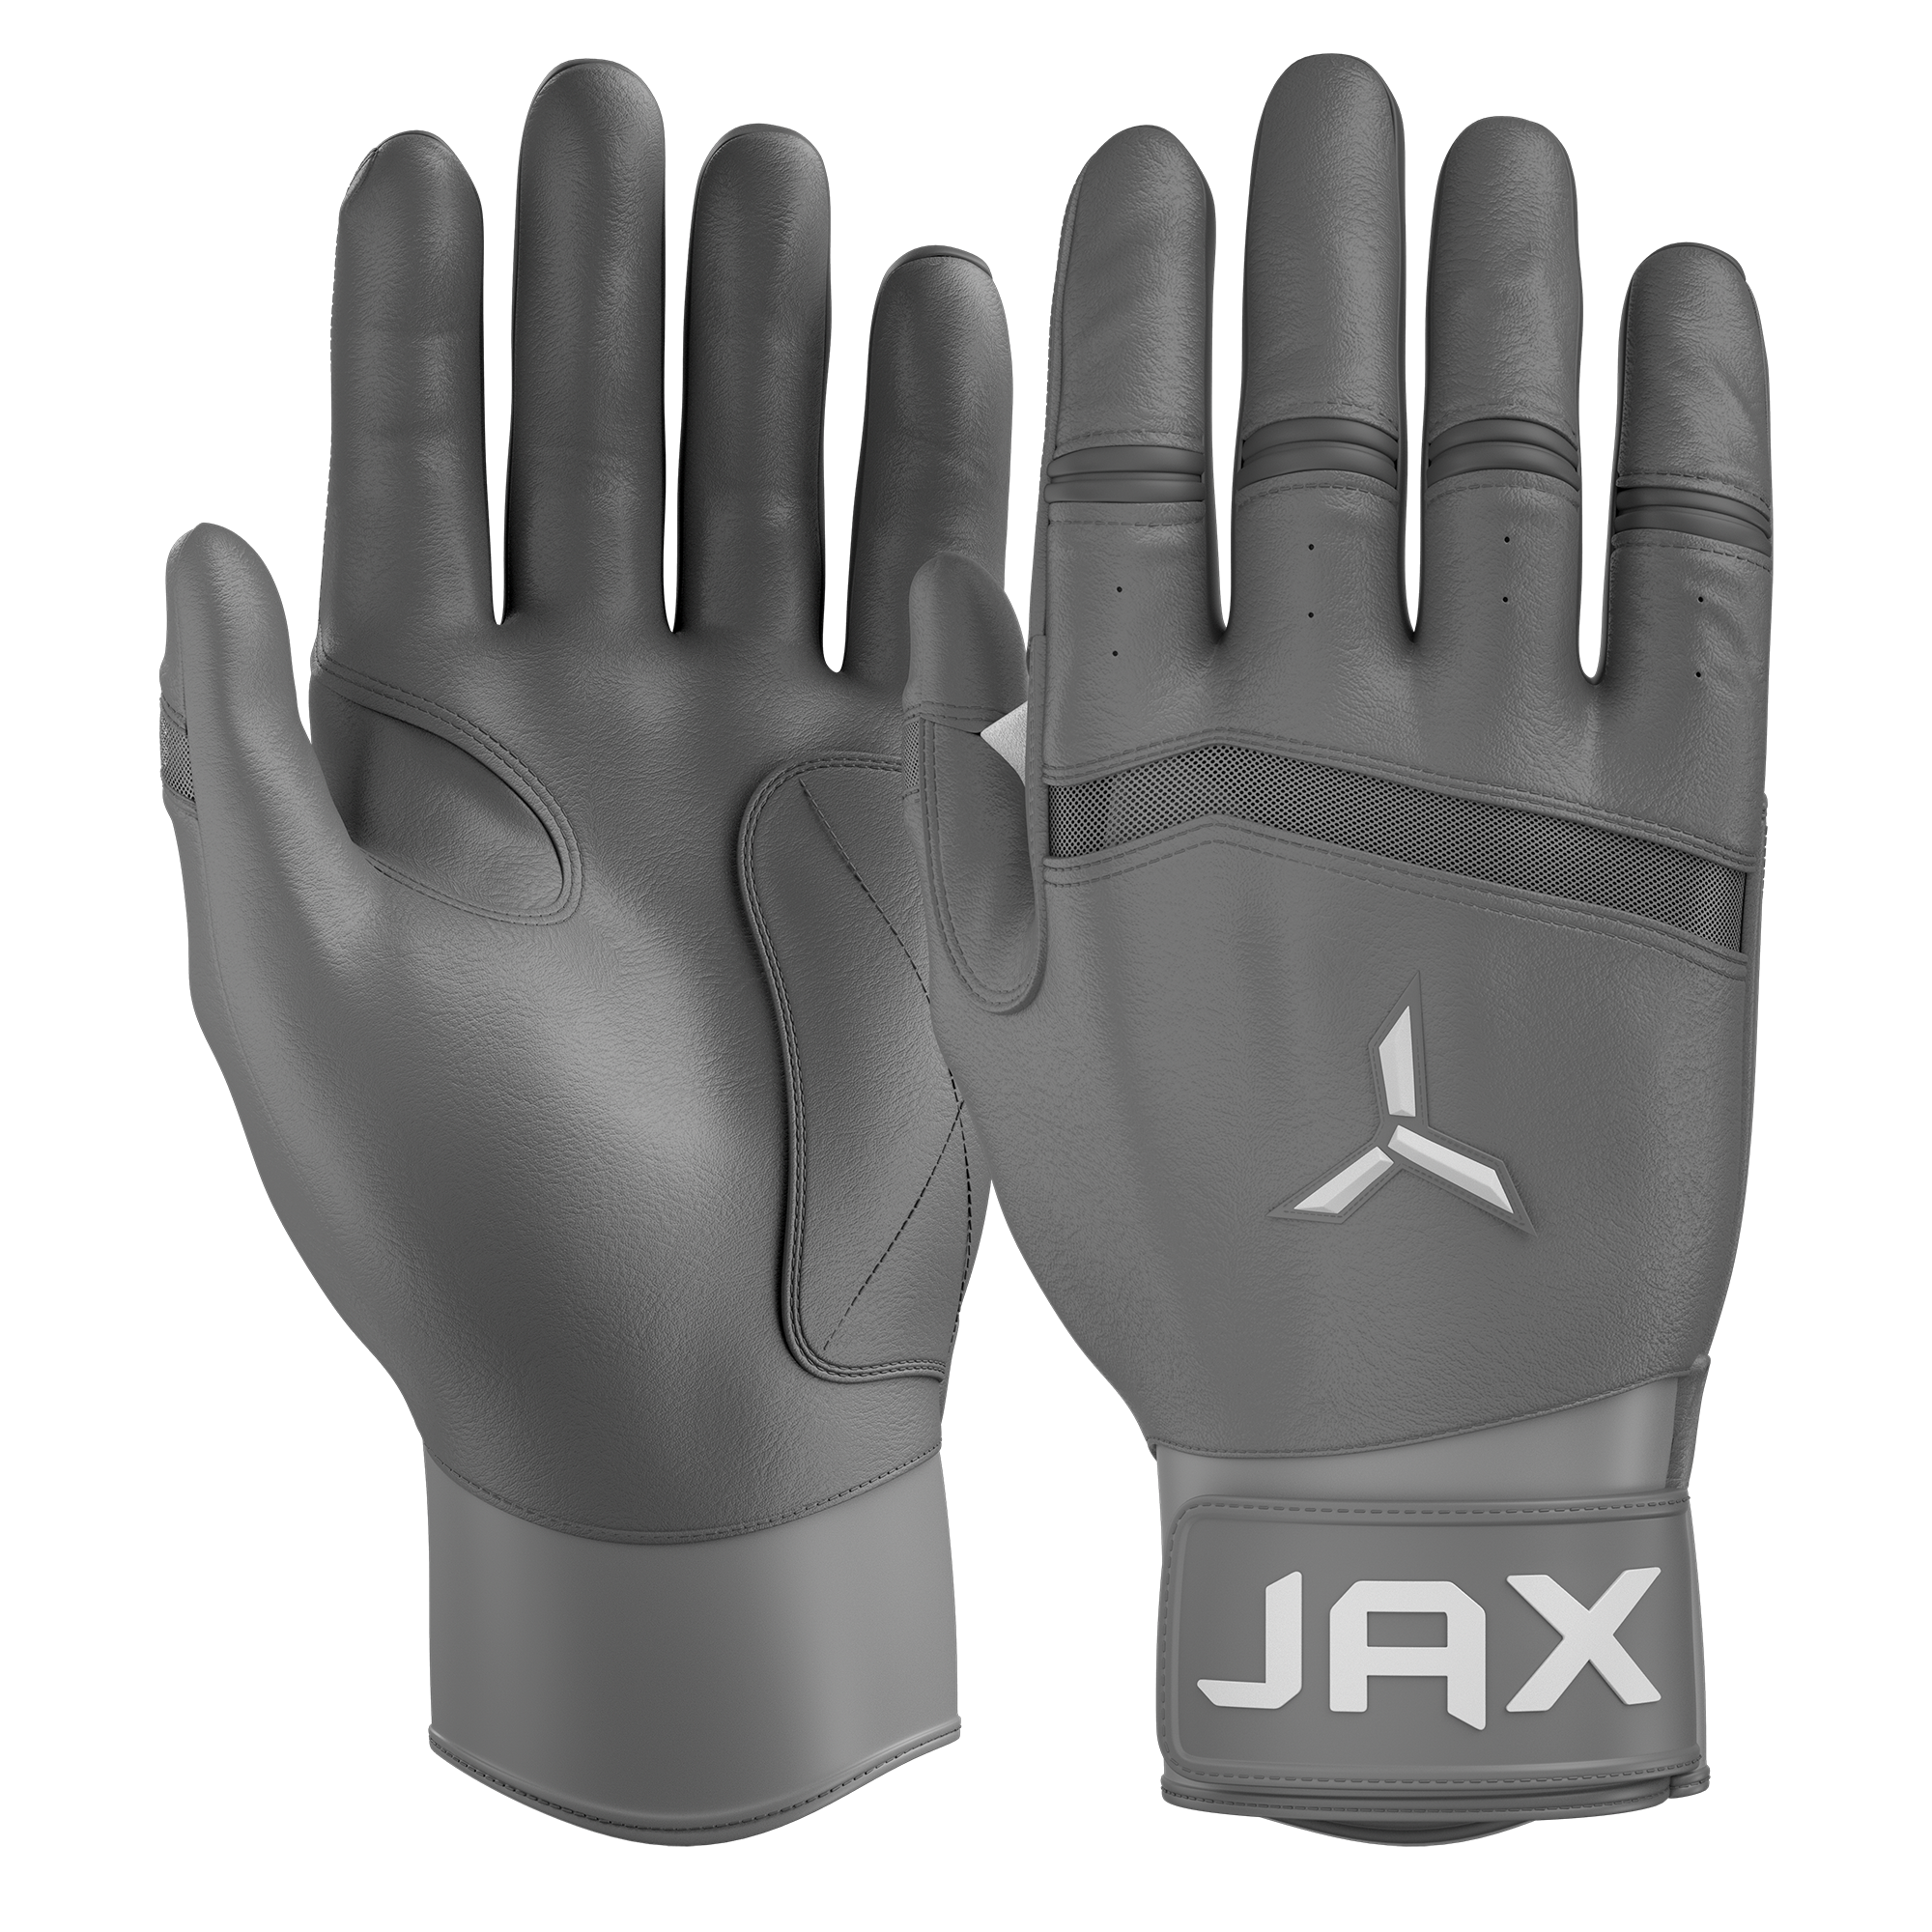 Jax Model One Graphite Grey - Pro Cuff